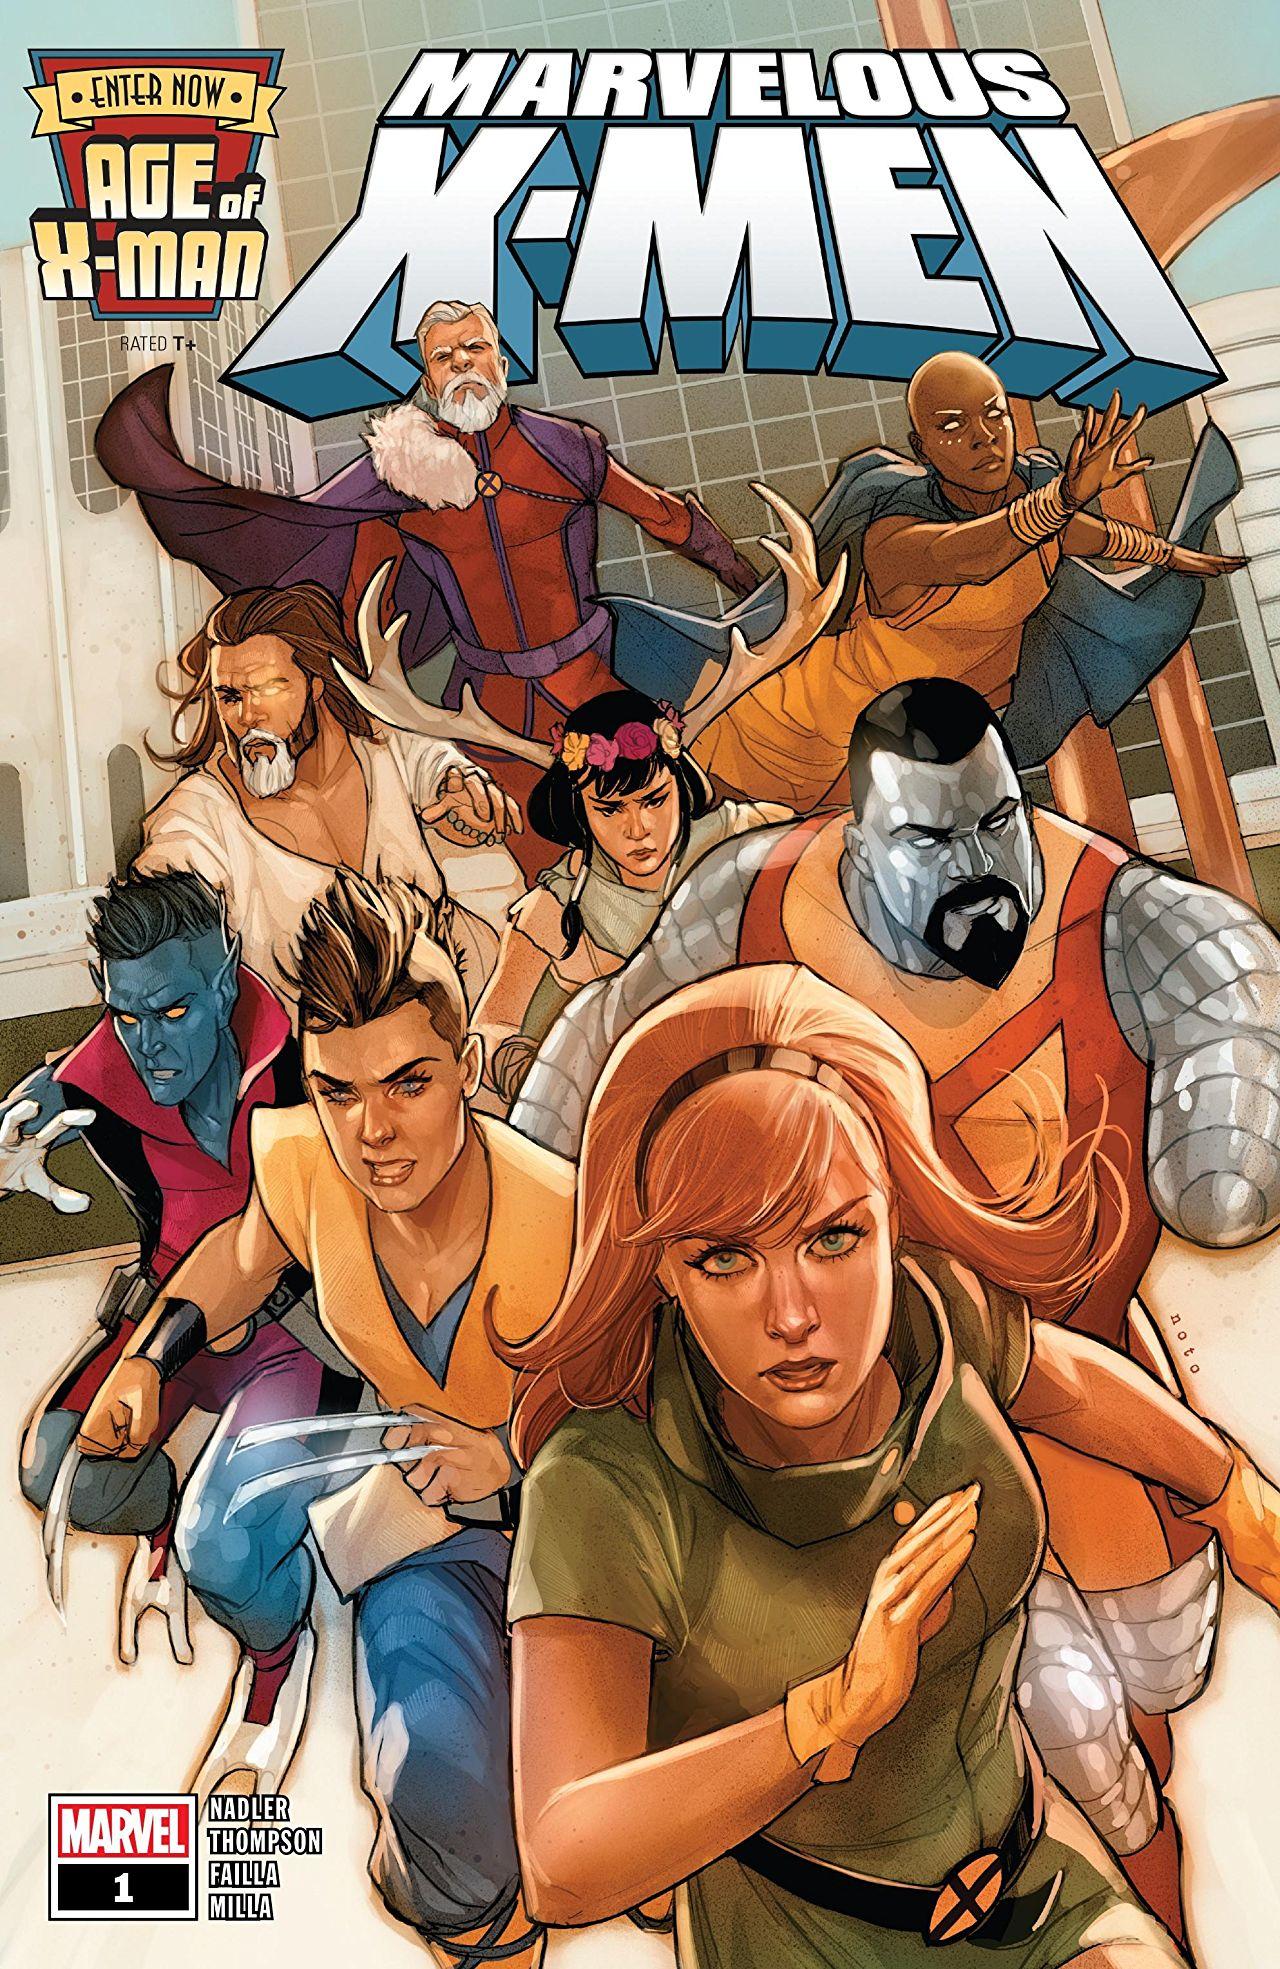 Age of X-Man: The Marvelous X-Men Vol. 1 #1